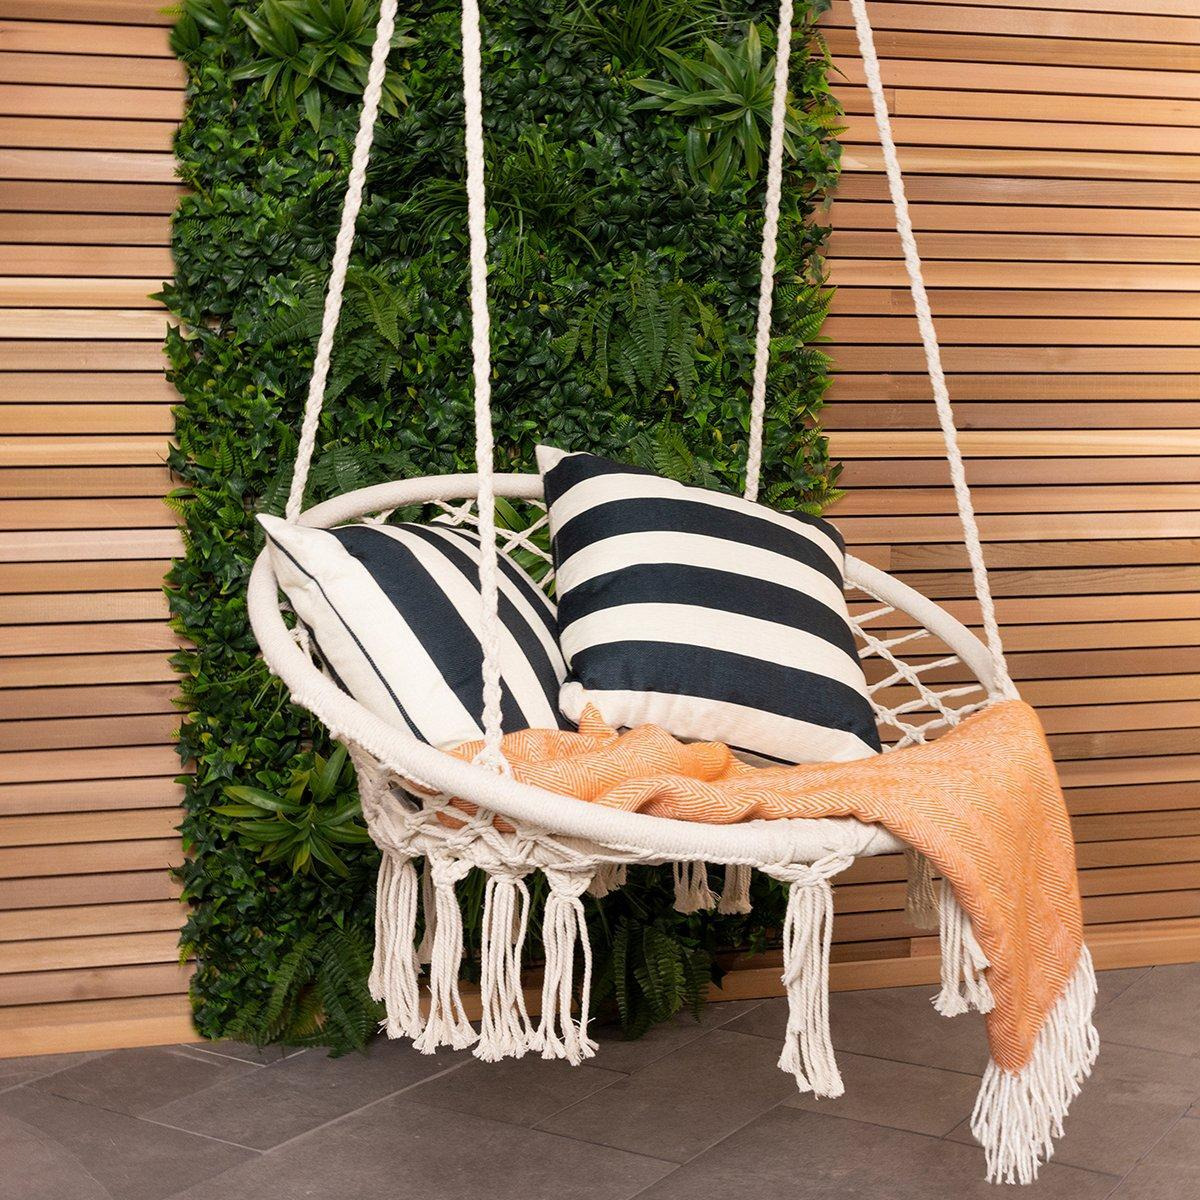 Cotton Woven Hanging Swing Chair / Hammock in Beige - image 1